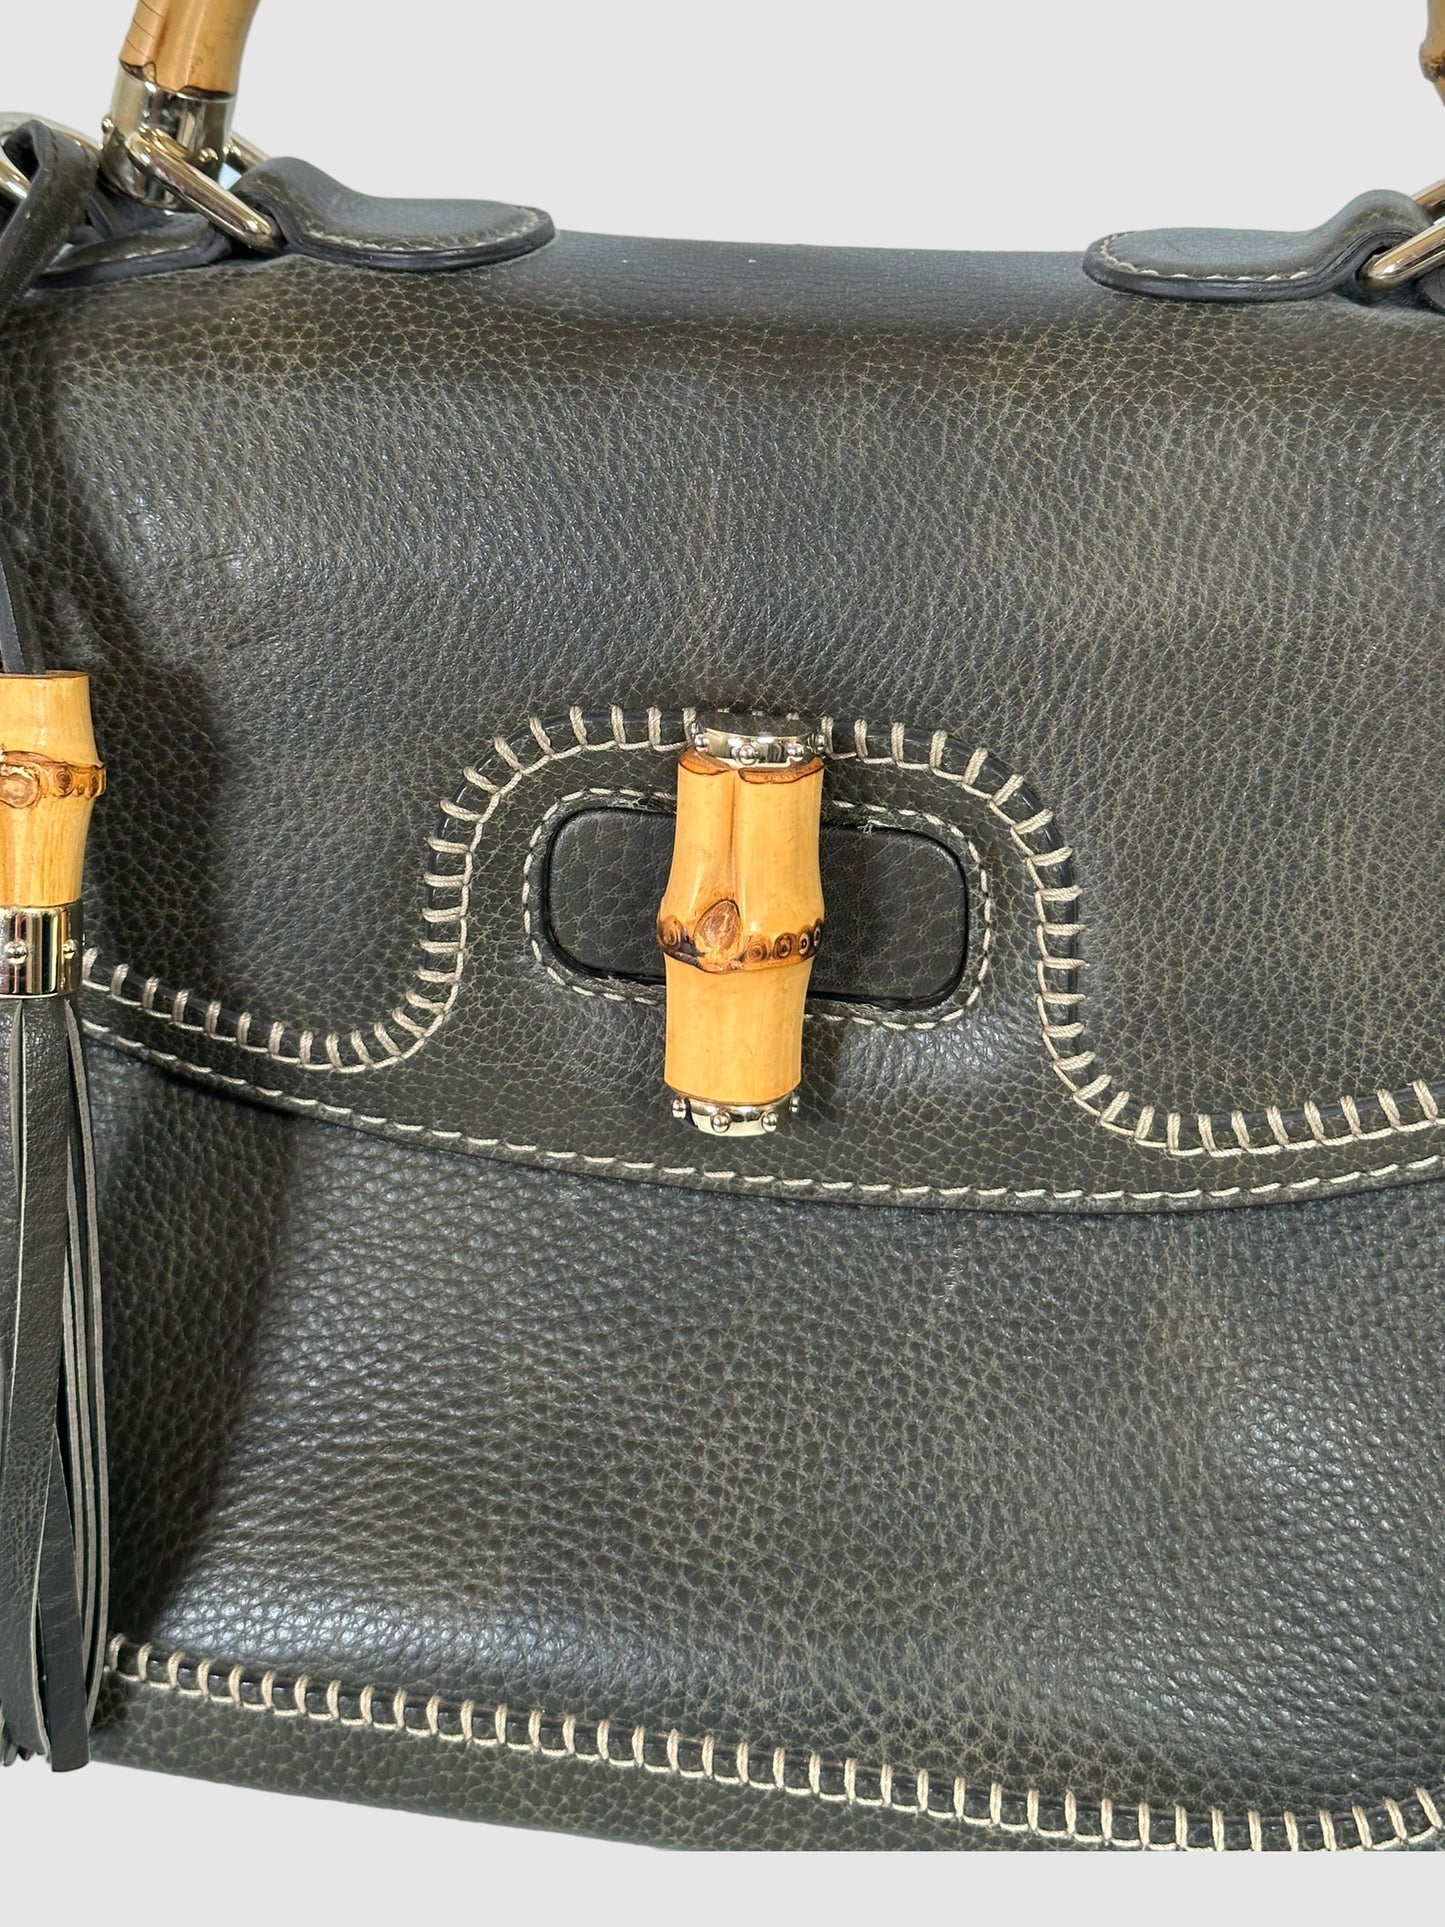 Gucci Large Bamboo Top Handle Bag